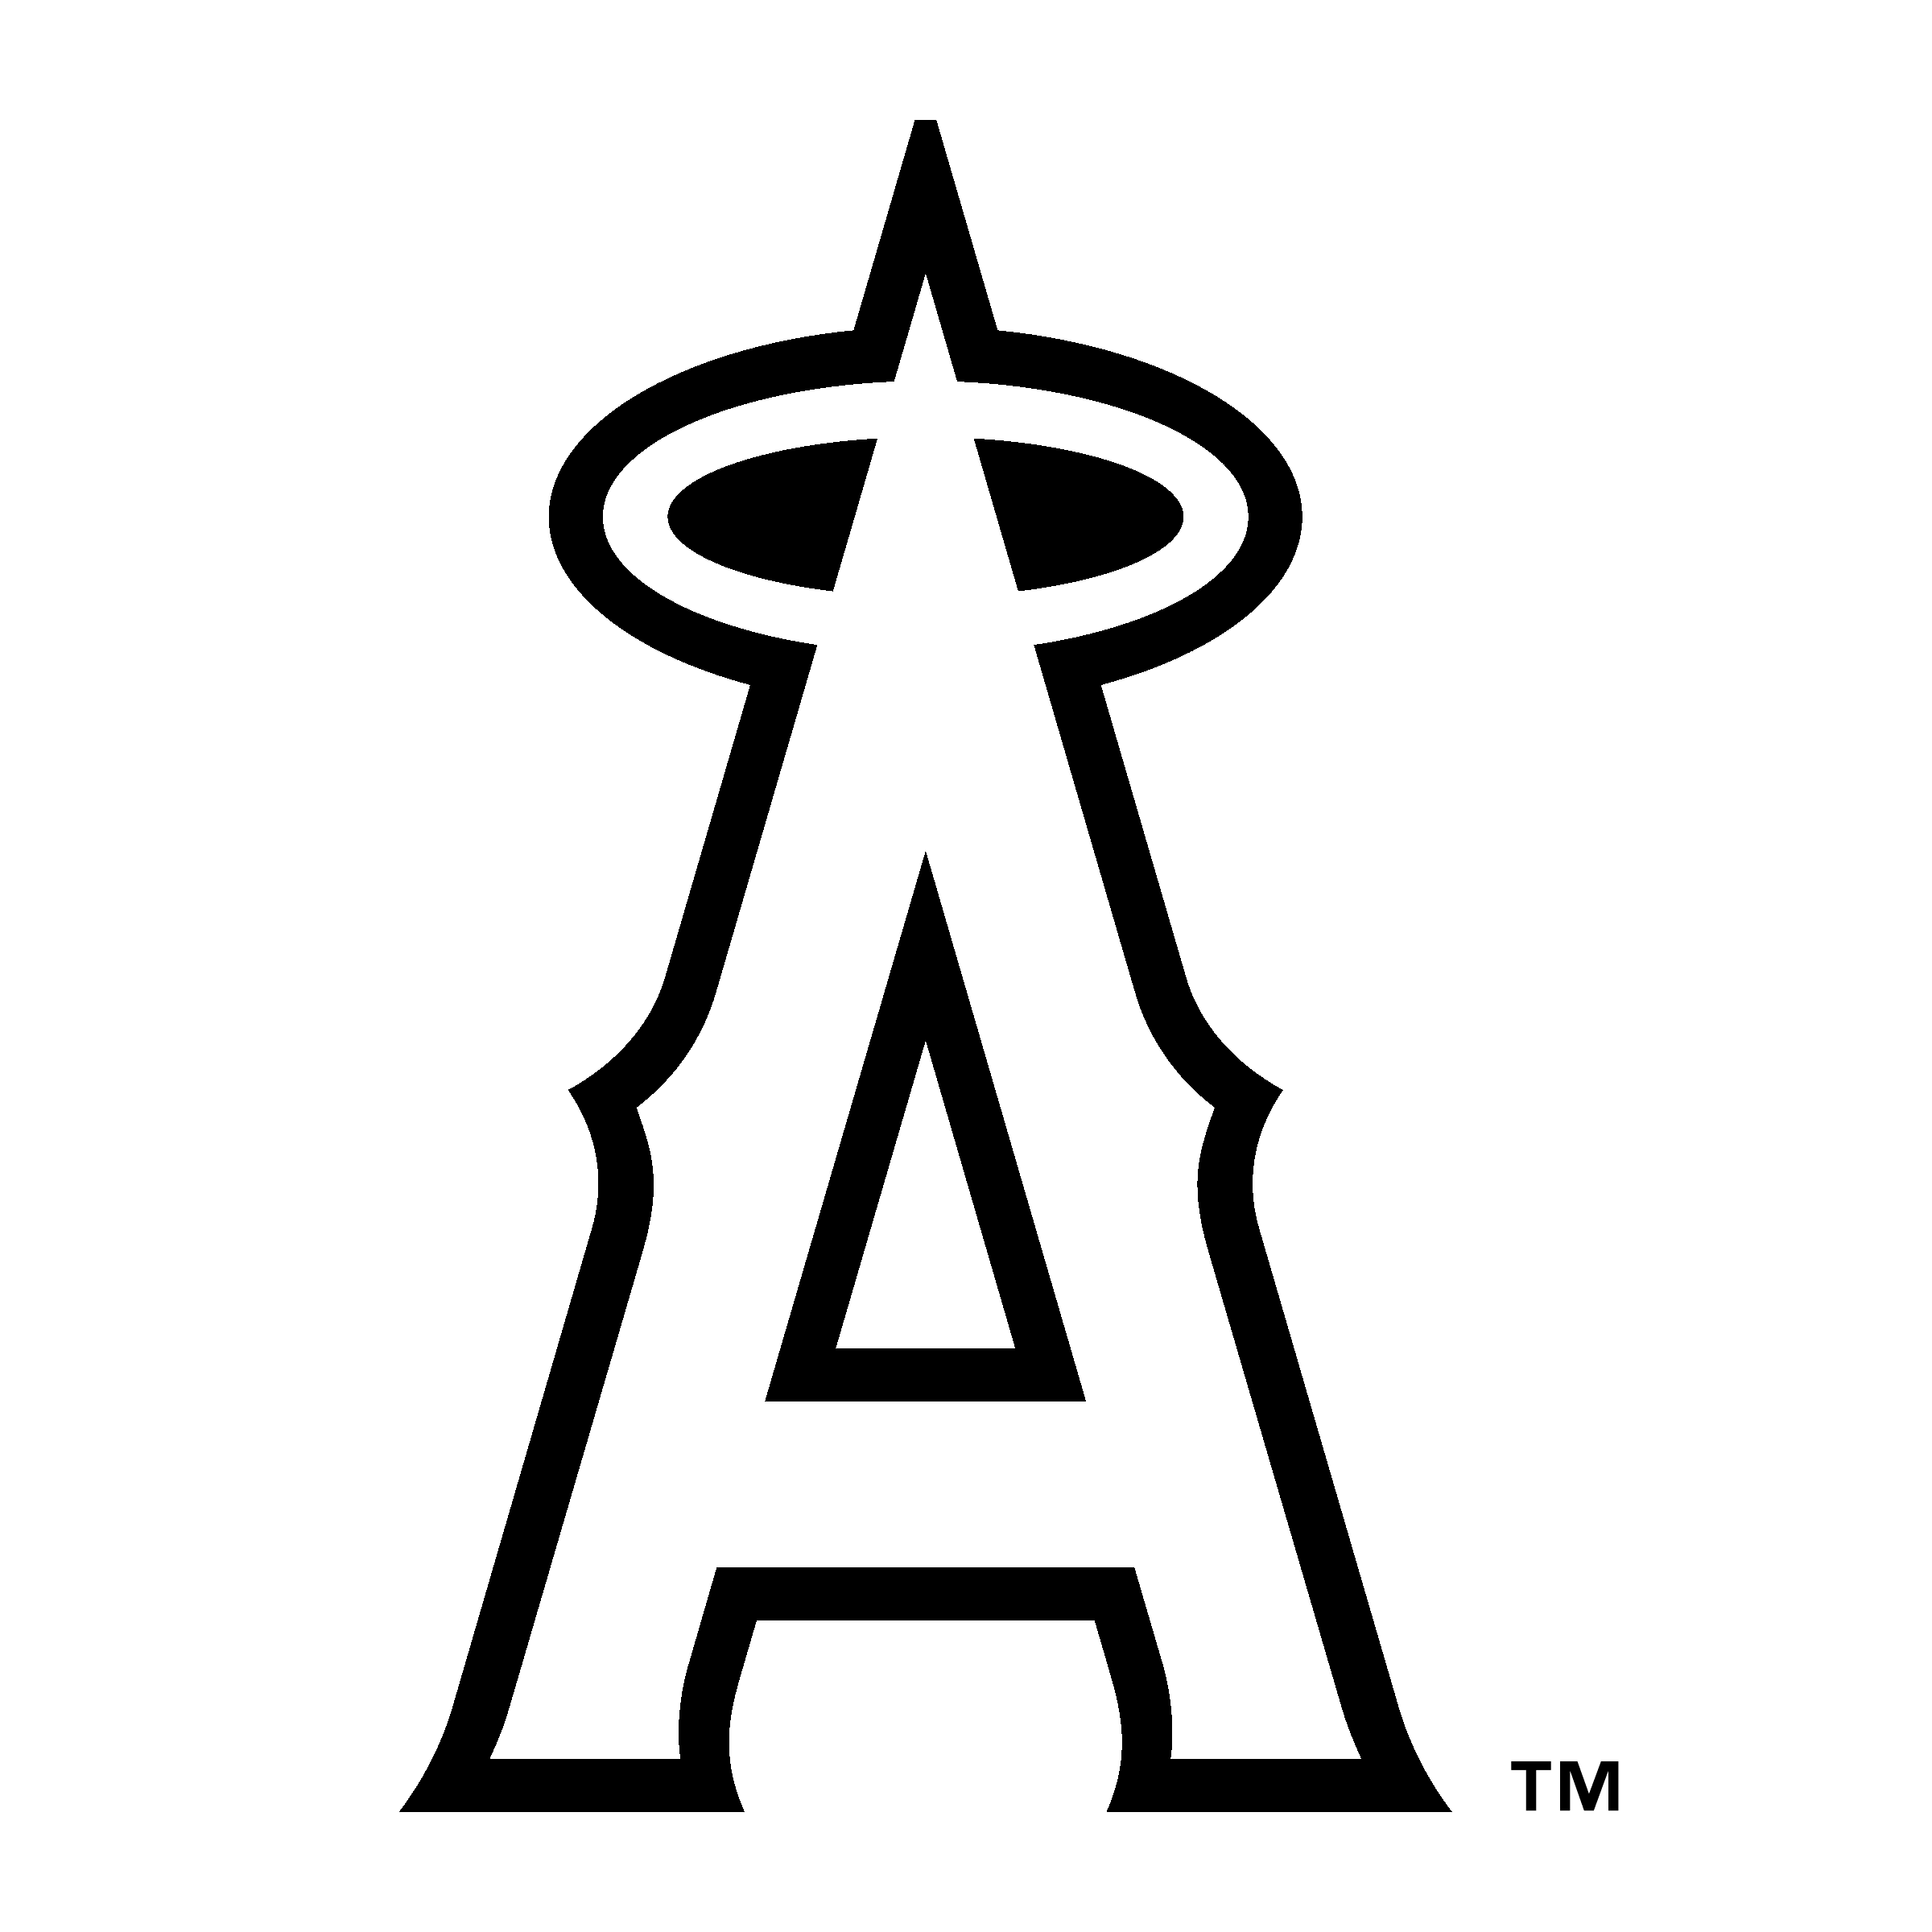 Angles Logo - Anaheim Angels Logo PNG Transparent & SVG Vector